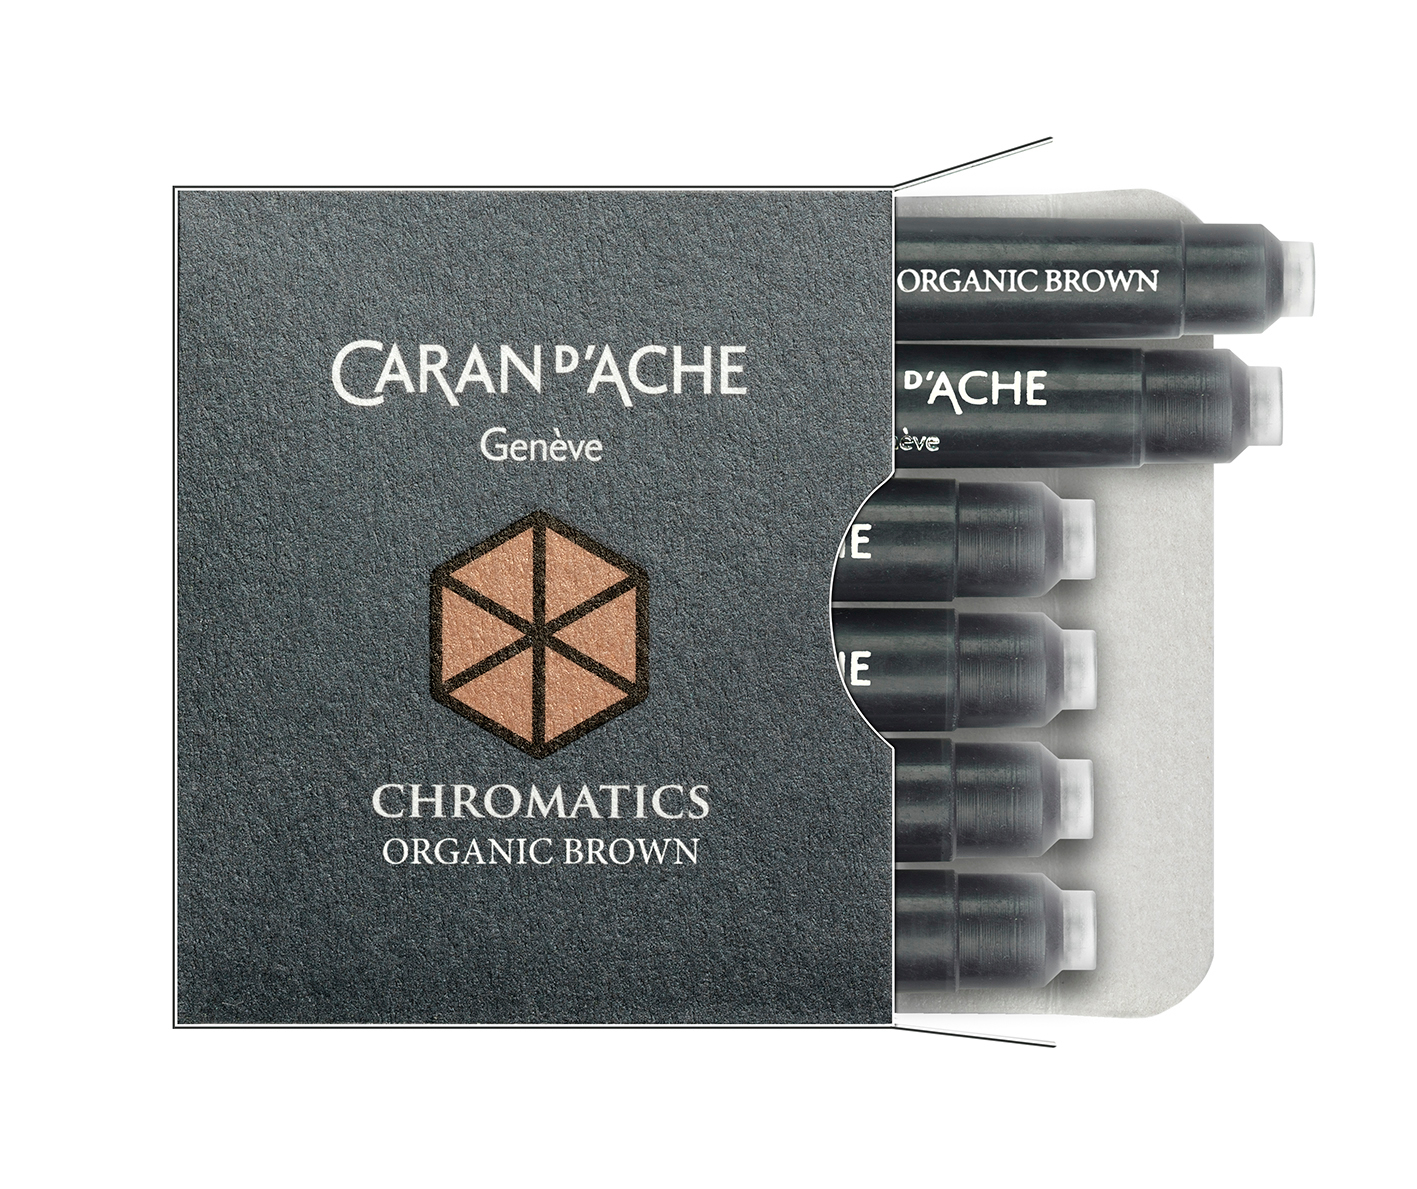 CARAN D'ACHE Cartouche d'encre 8021.049 Organic Brown 6 pcs.